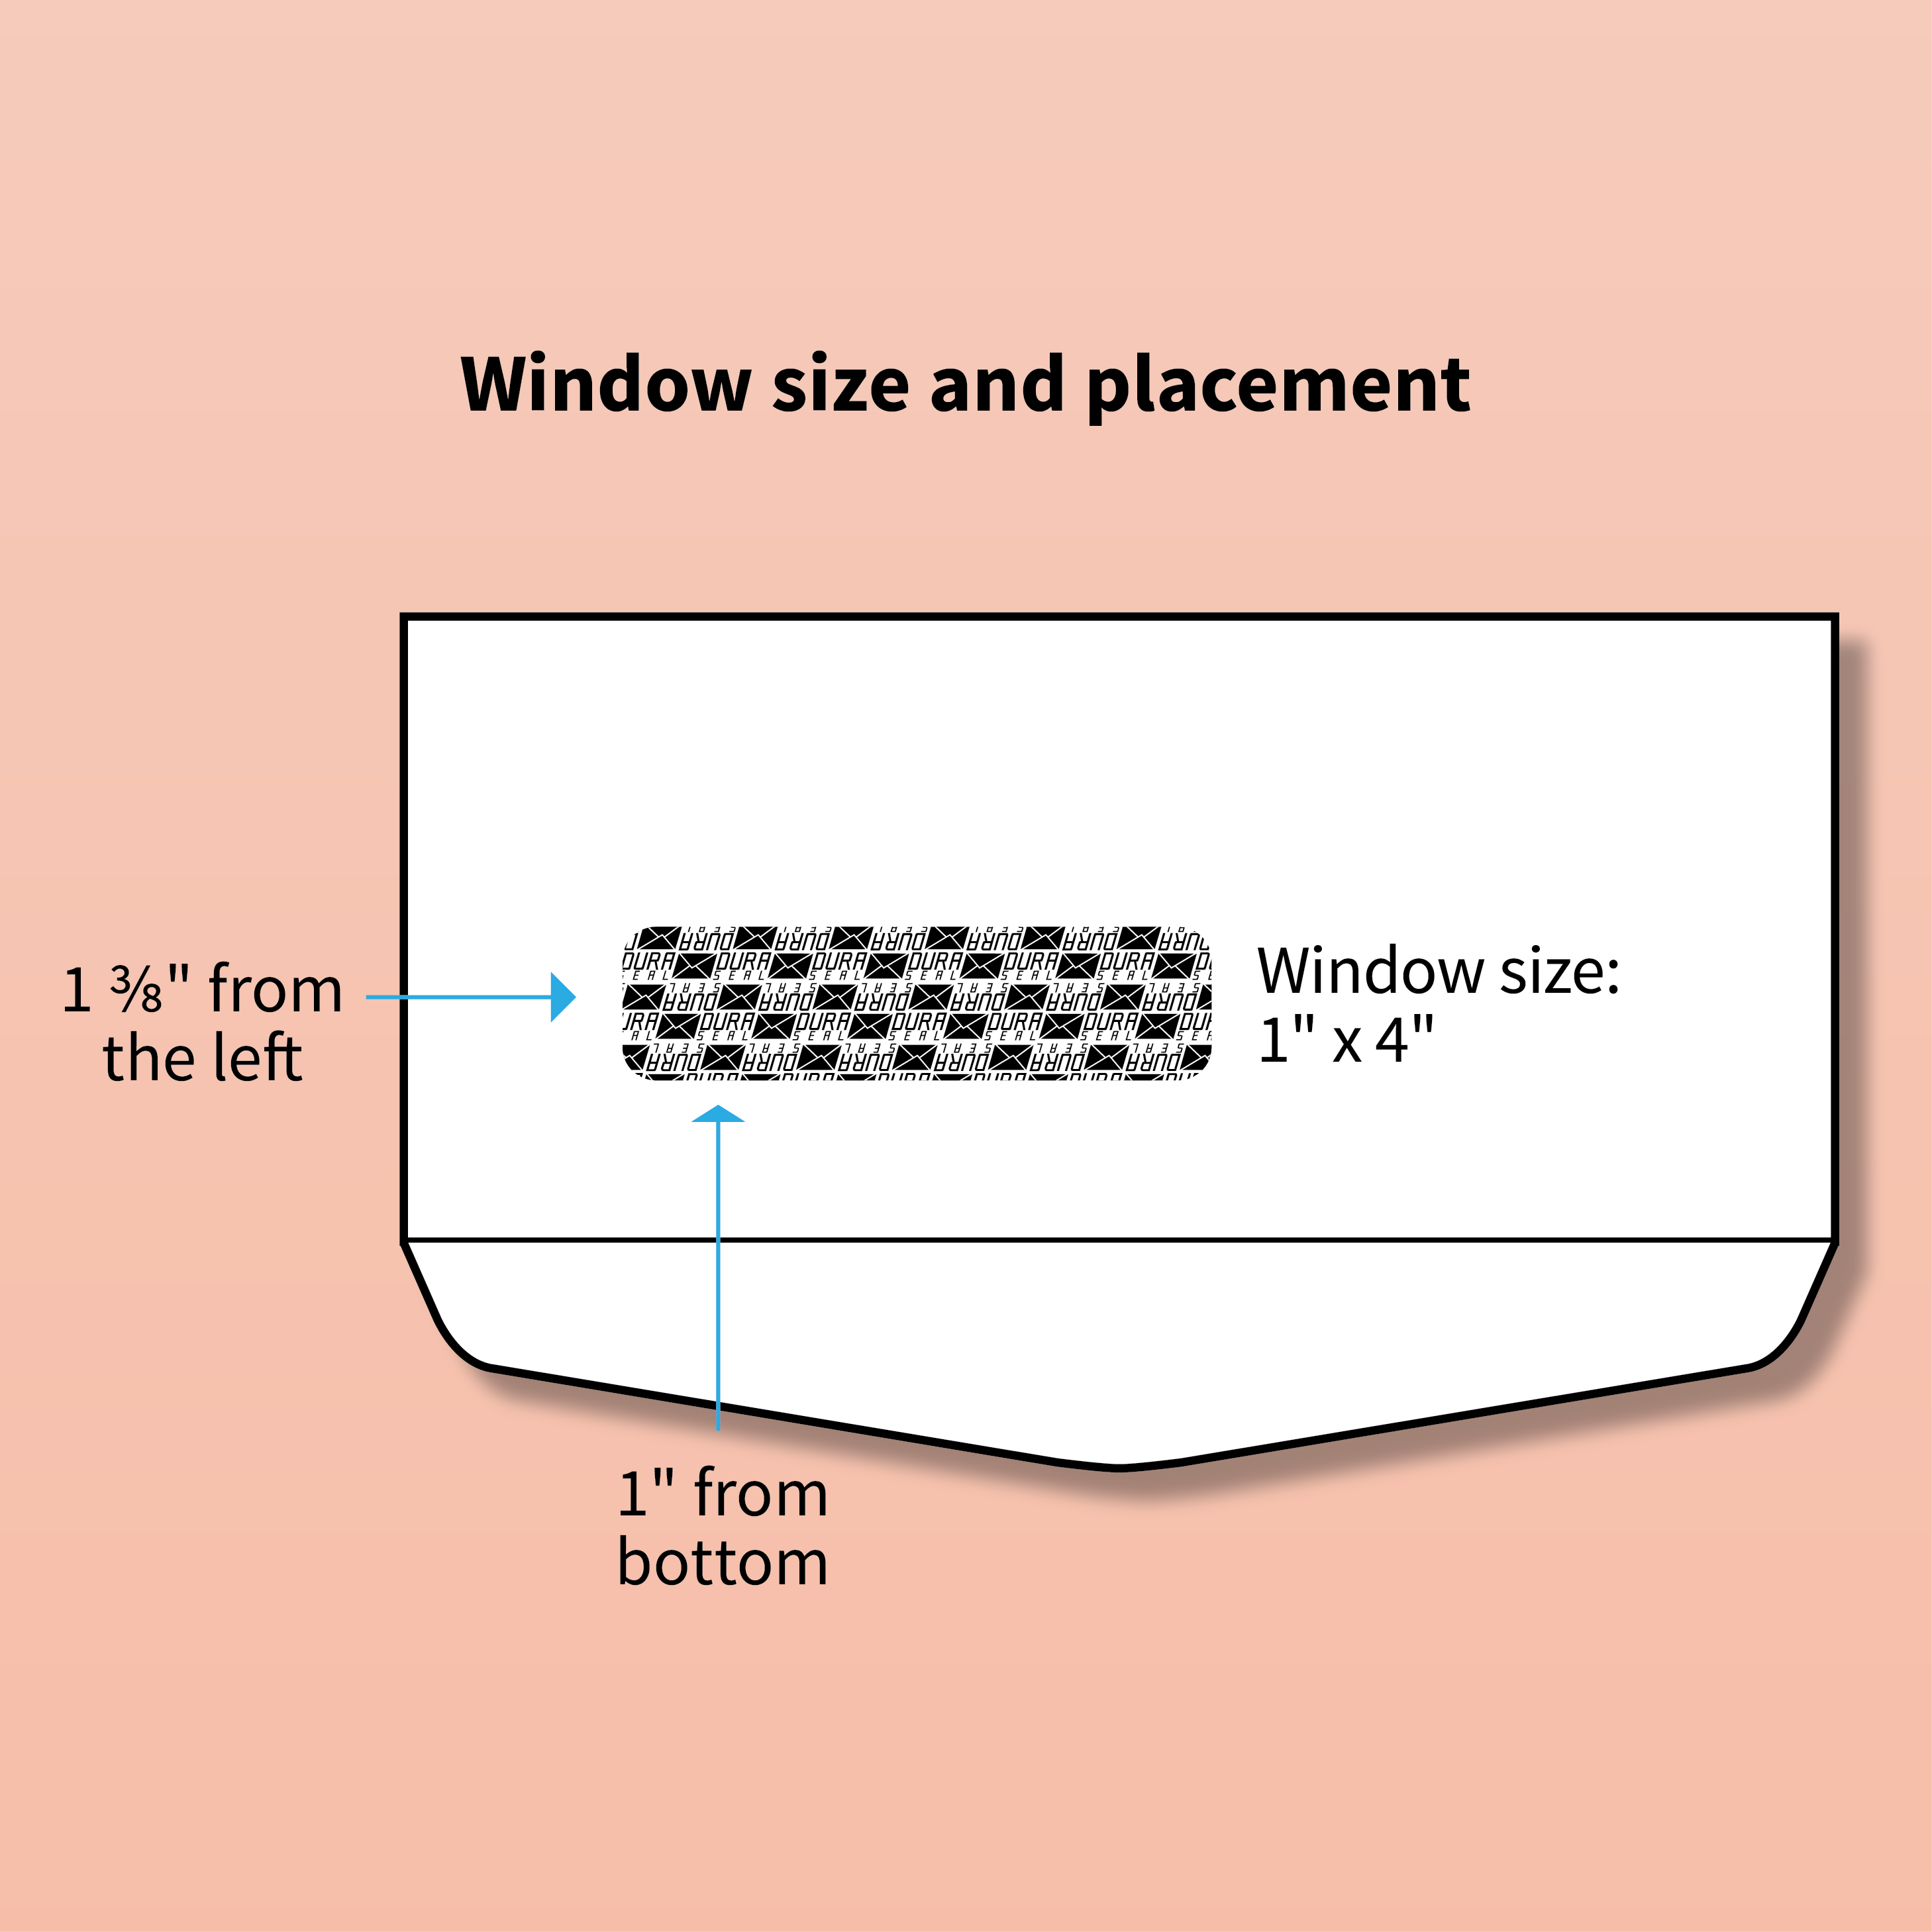 DURASEAL #10 Single Window Envelope Reverse Flap (2,500 per case)